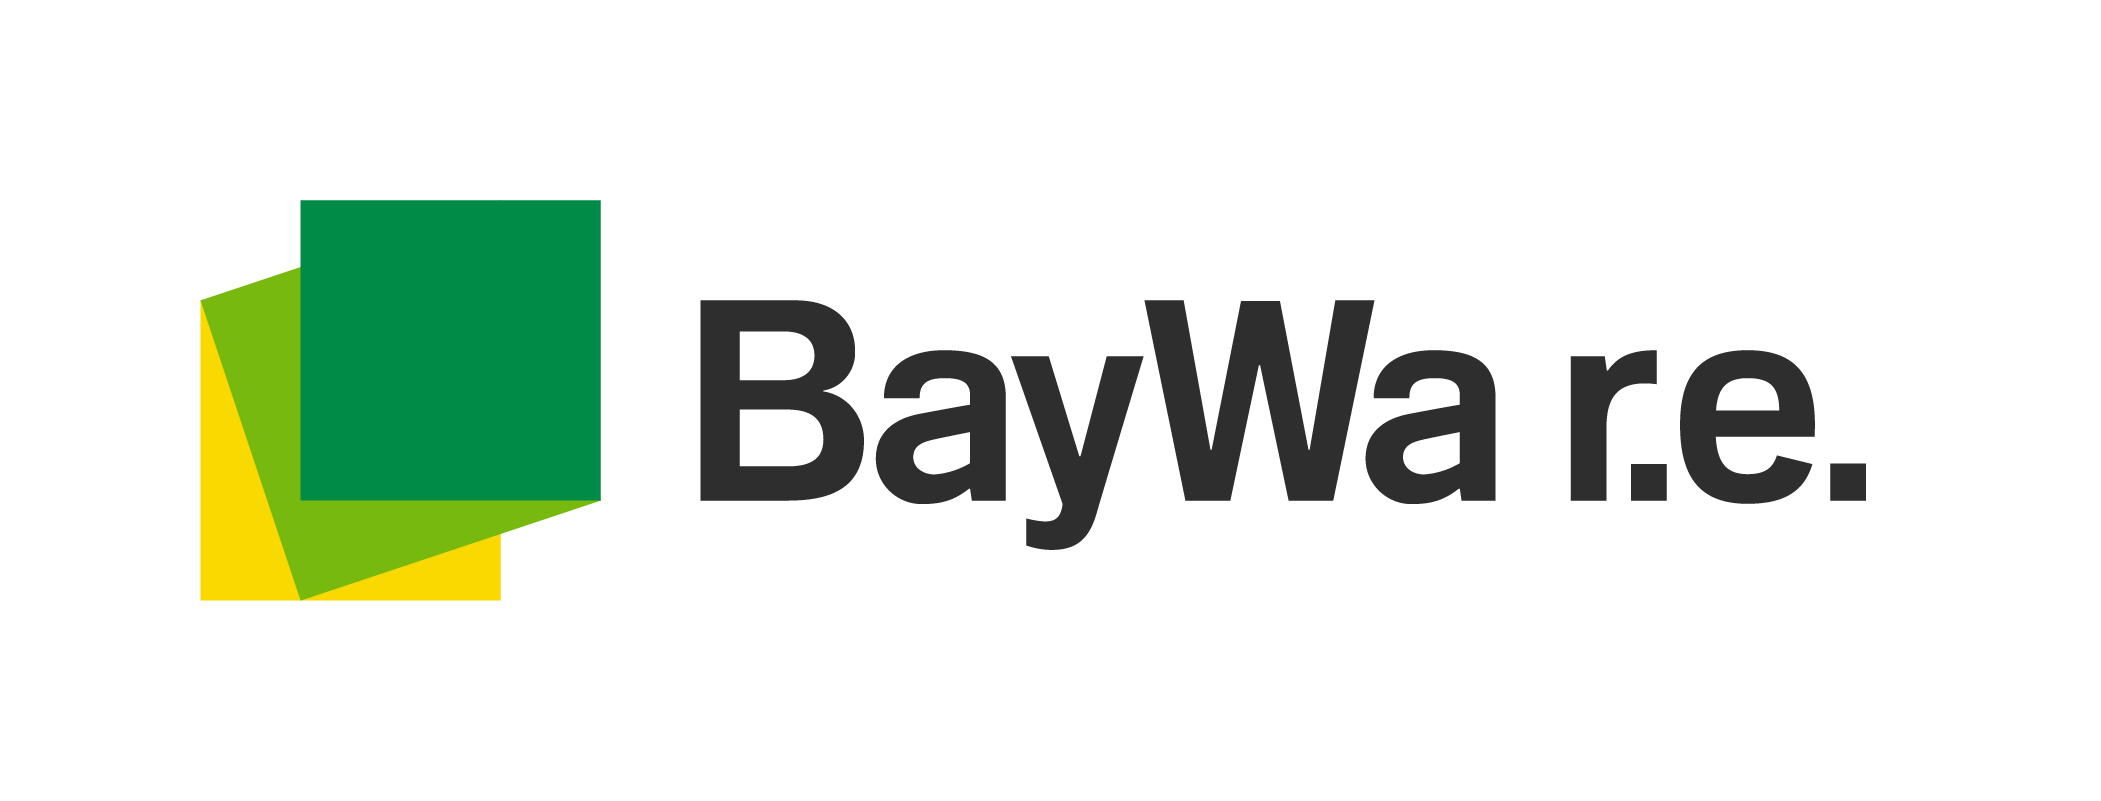 Baywa R.e. Power Solutions Srl